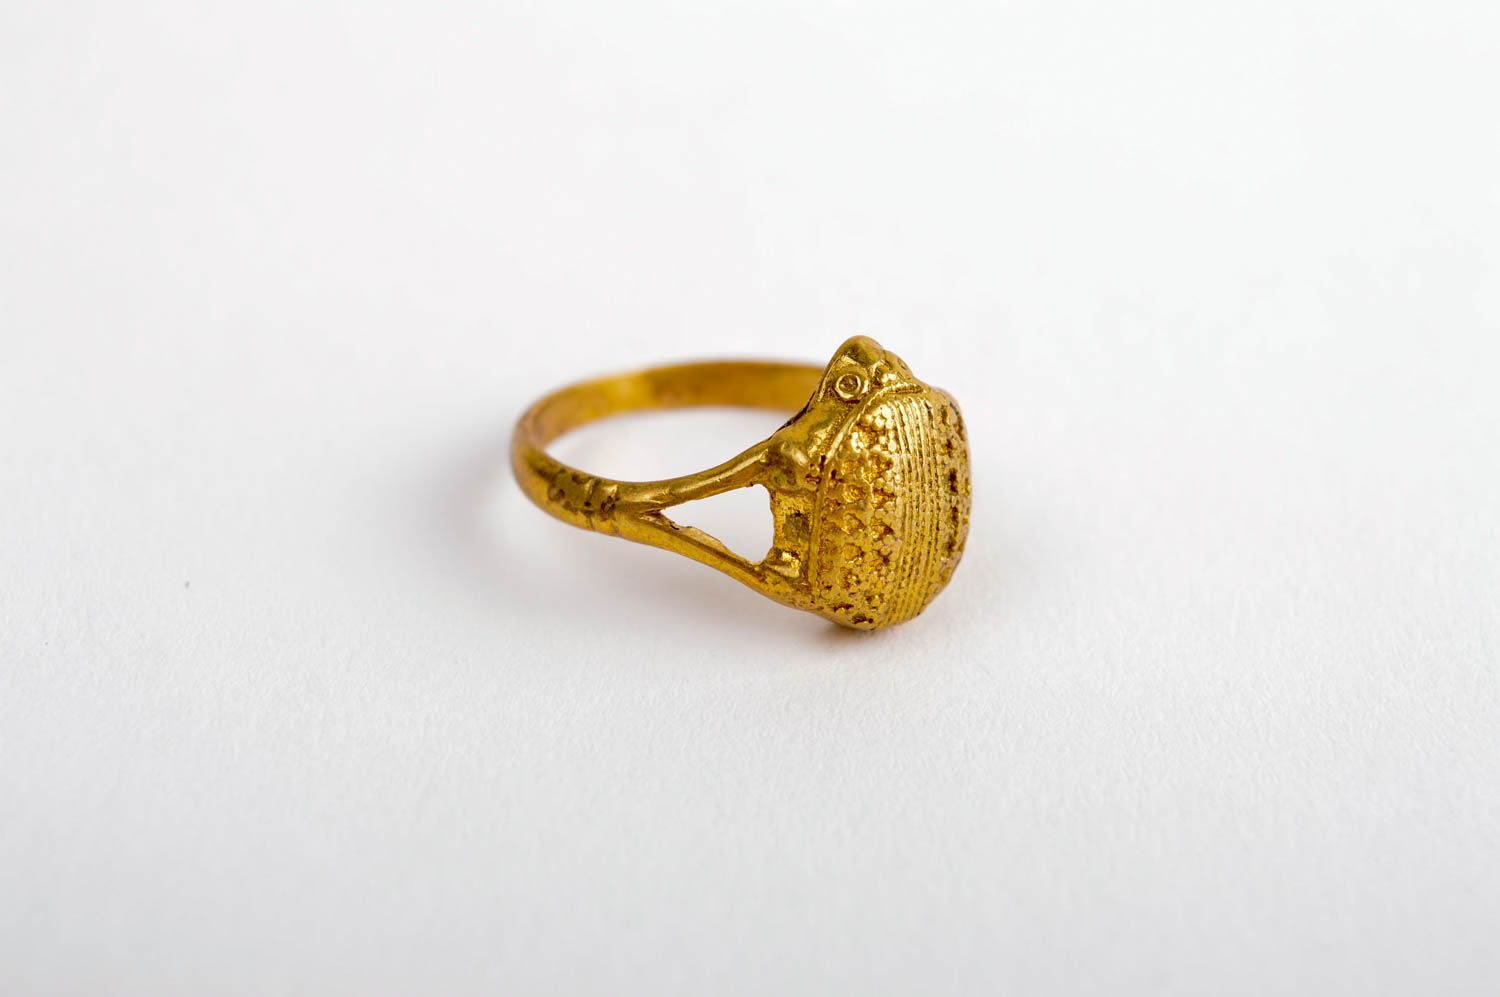 Stylish handmade metal ring beautiful jewellery cool jewelry designs gift ideas photo 2